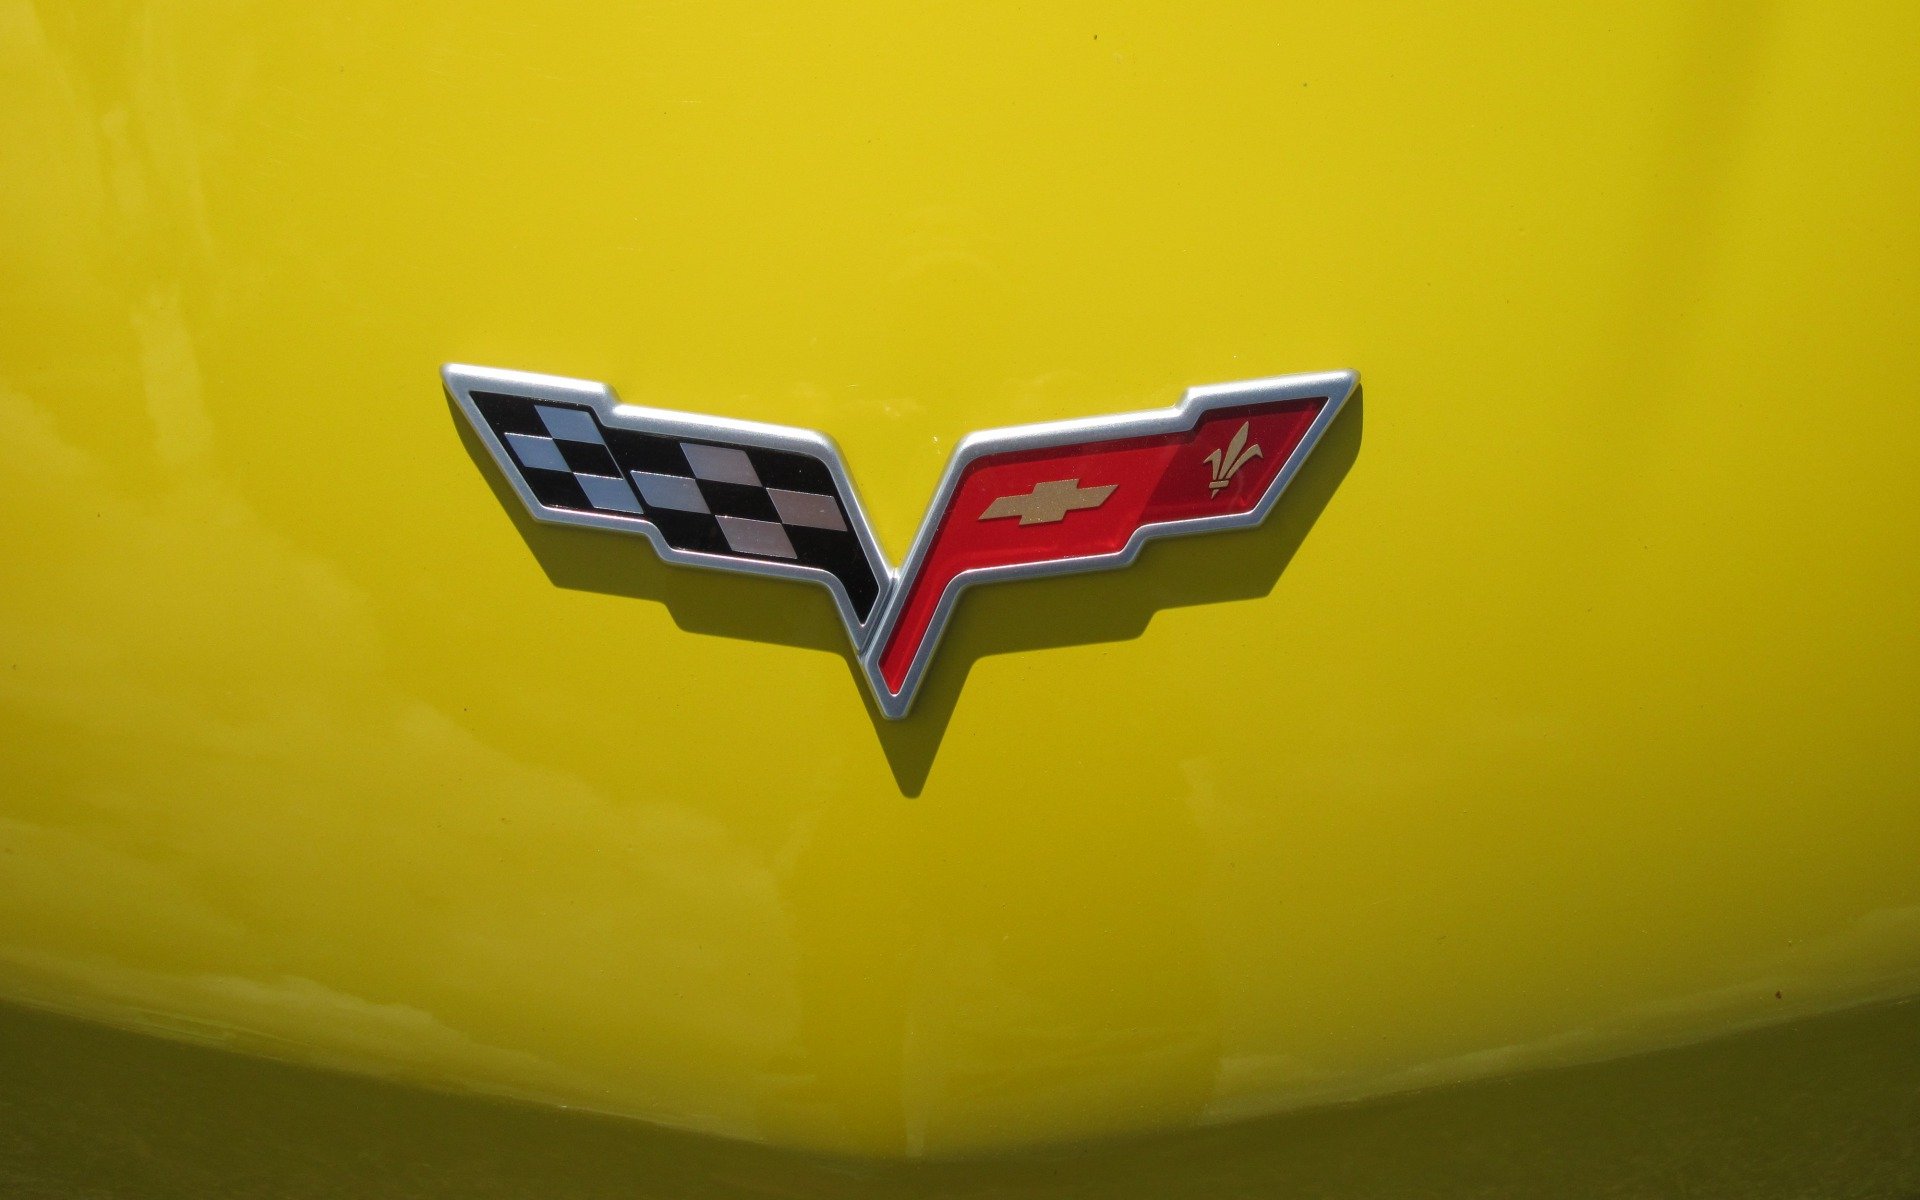  de pantalla 2008 Chevrolet Corvette Logo Coche Wallpapers Wallpapers